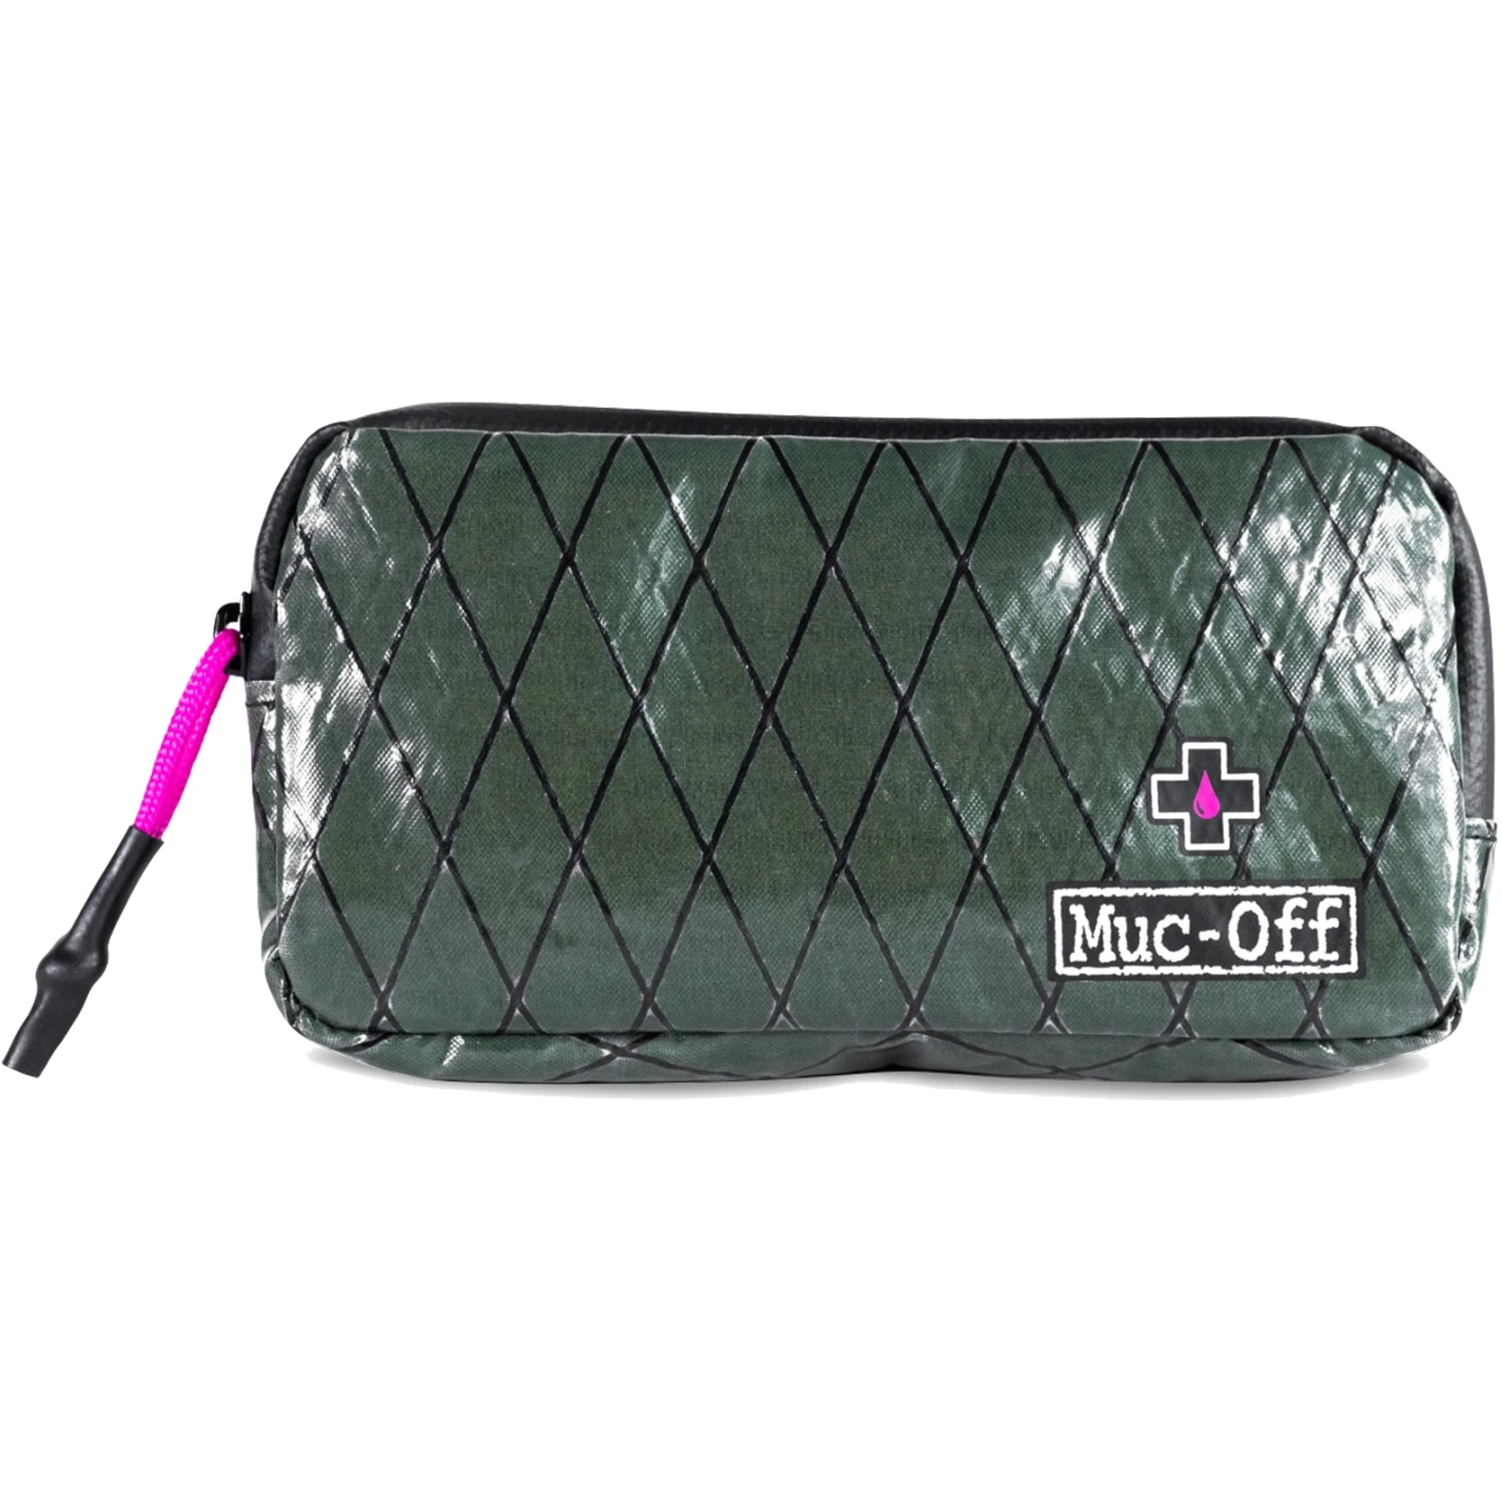 Productfoto van Muc-Off Rainproof Essential Case - Waterdichte Accessoiretas - groen